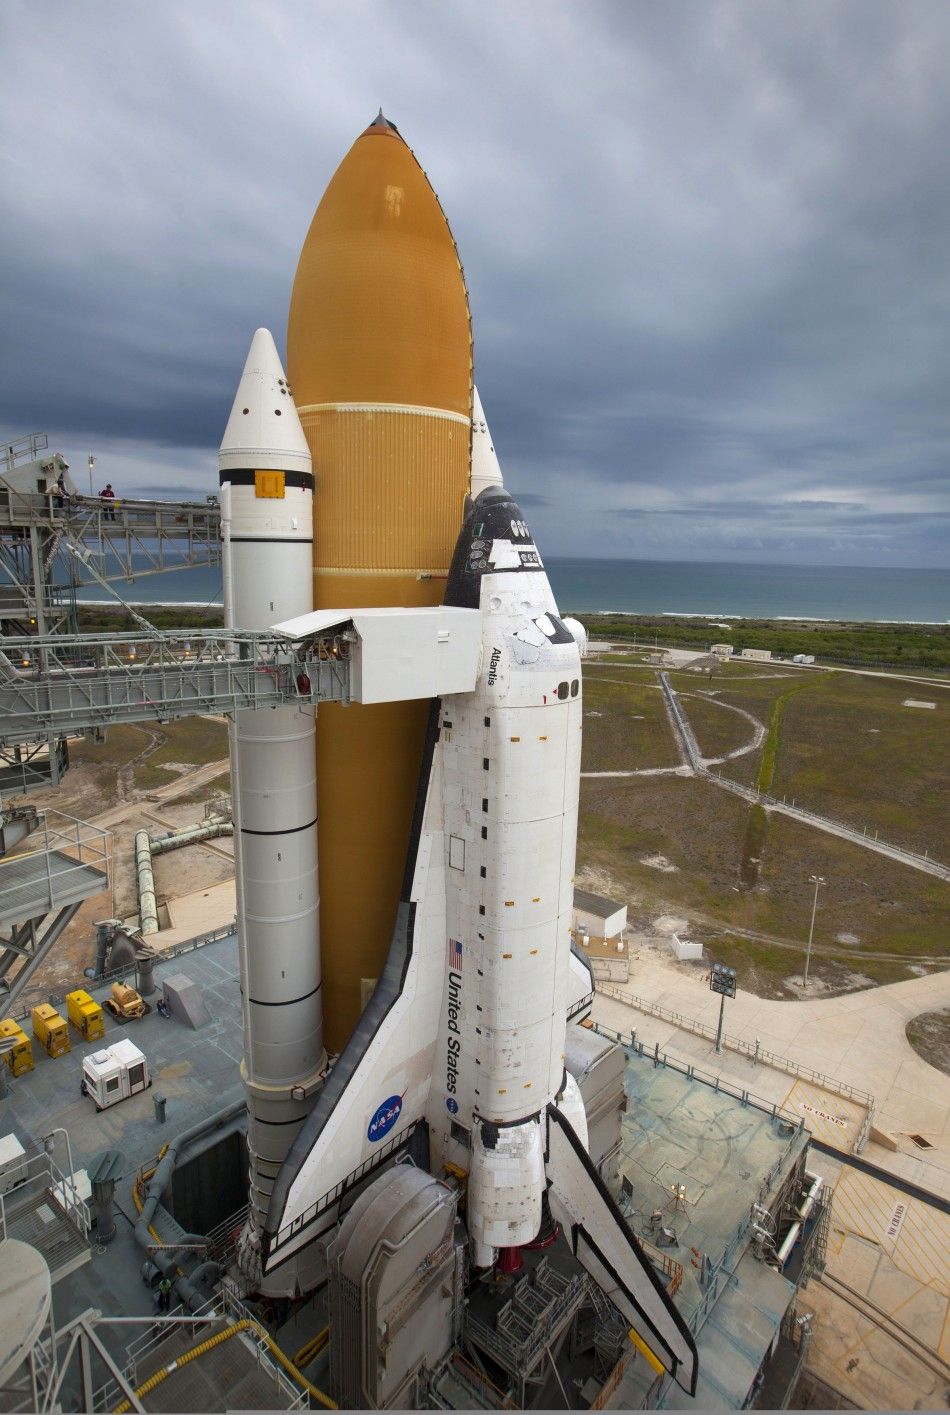 NASA Space Shuttle Atlantis Sits on Launch Pad